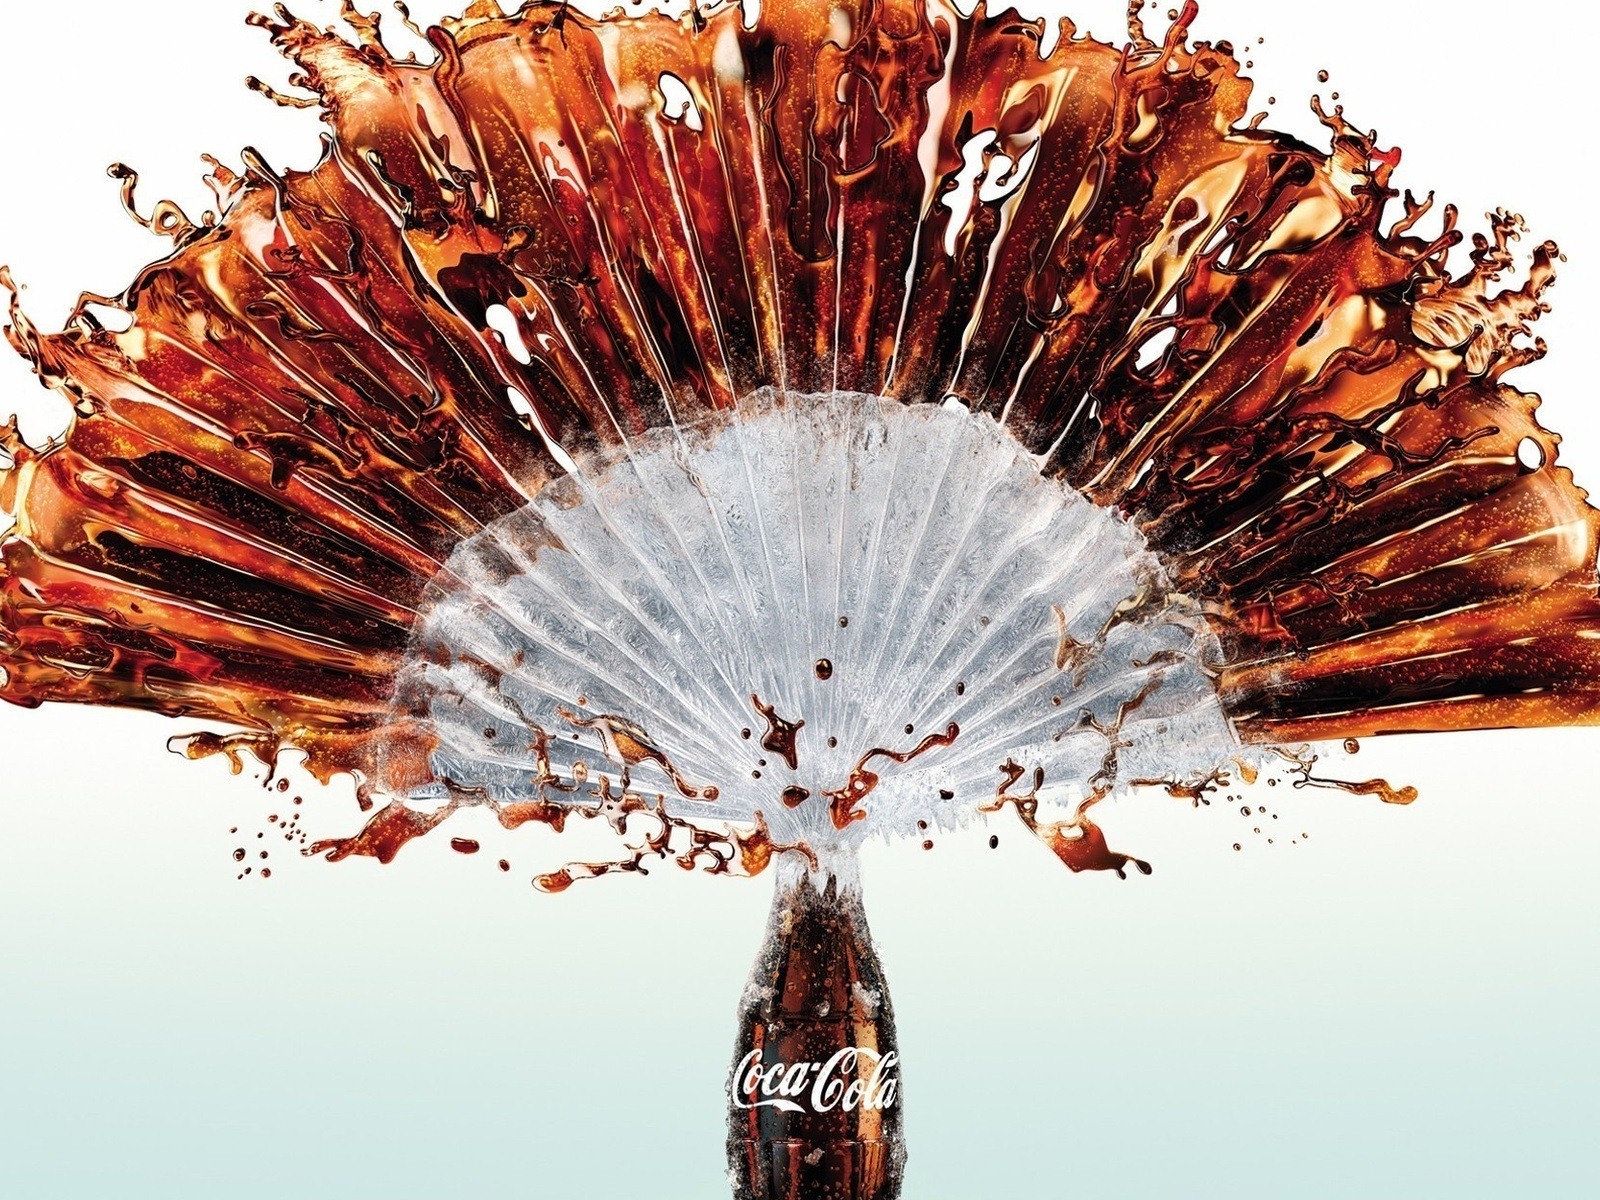 Coca-Cola 可口可樂精美廣告壁紙 #1 - 1600x1200